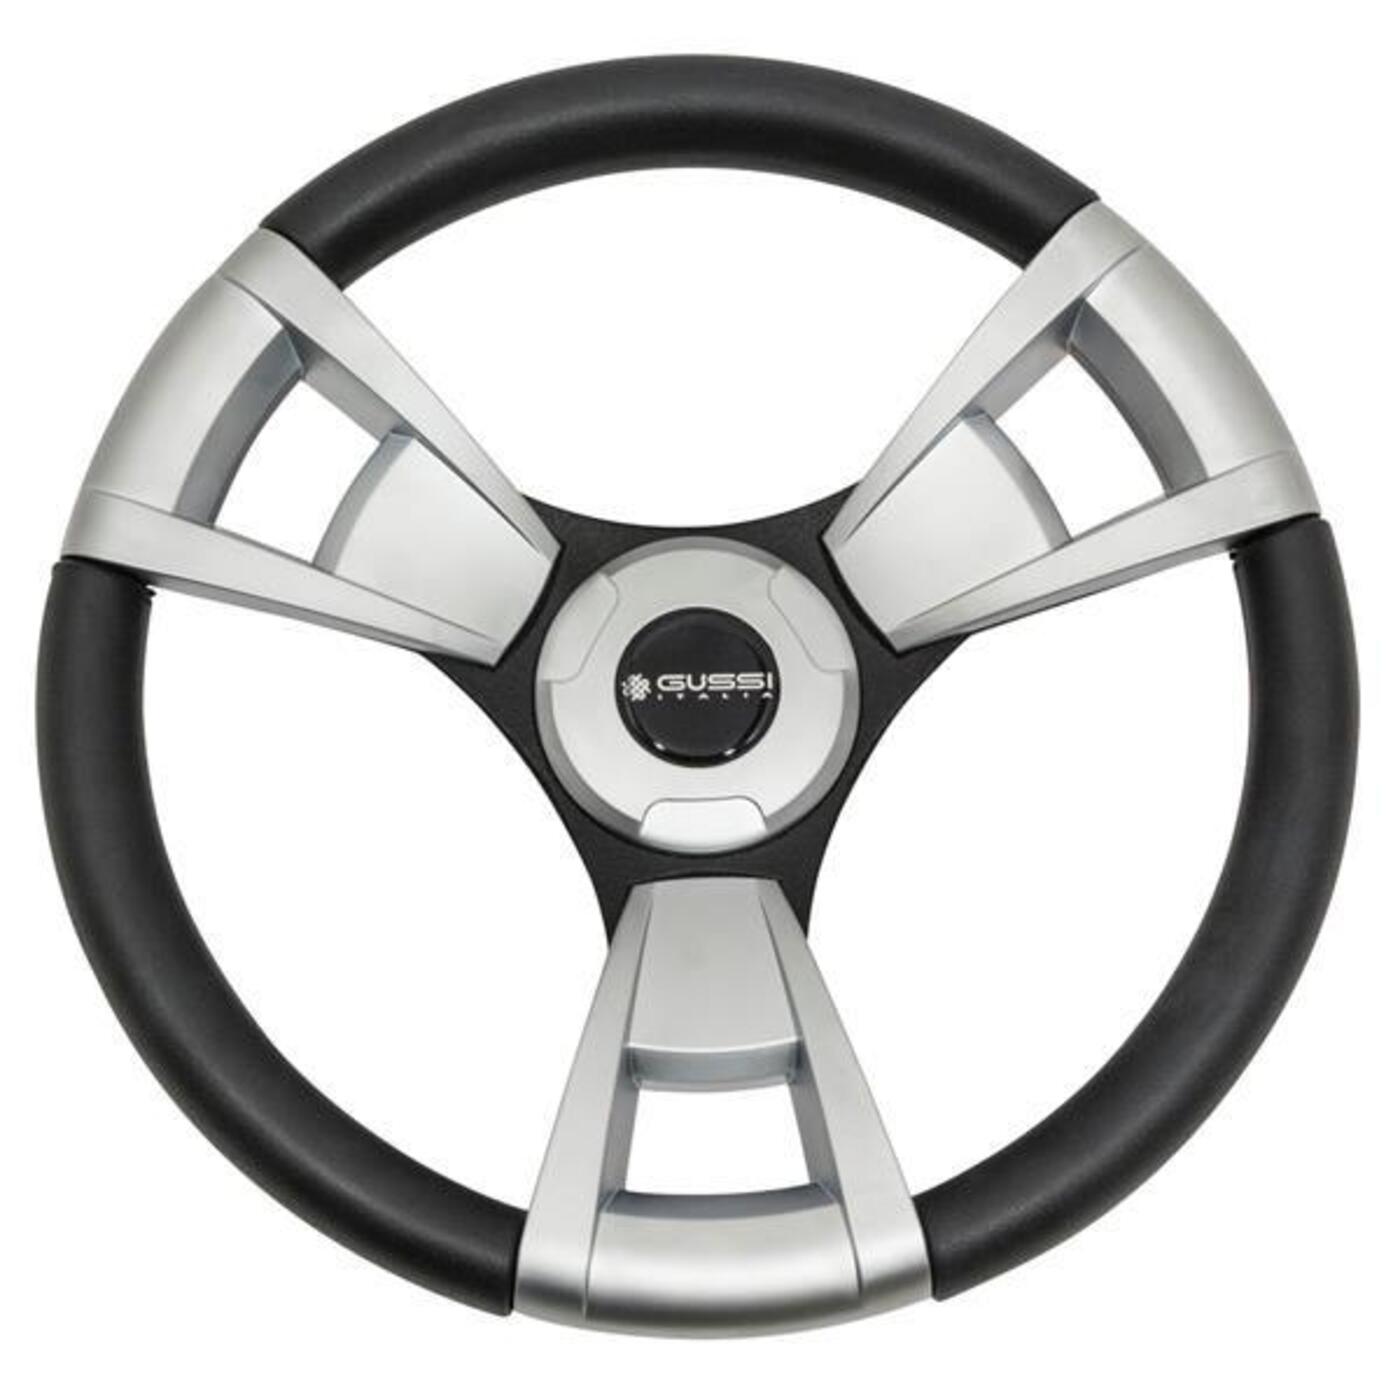 Gussi Italia Model 13 Black/Brushed Steering Wheel For All Club Car Precedent Models 06-124